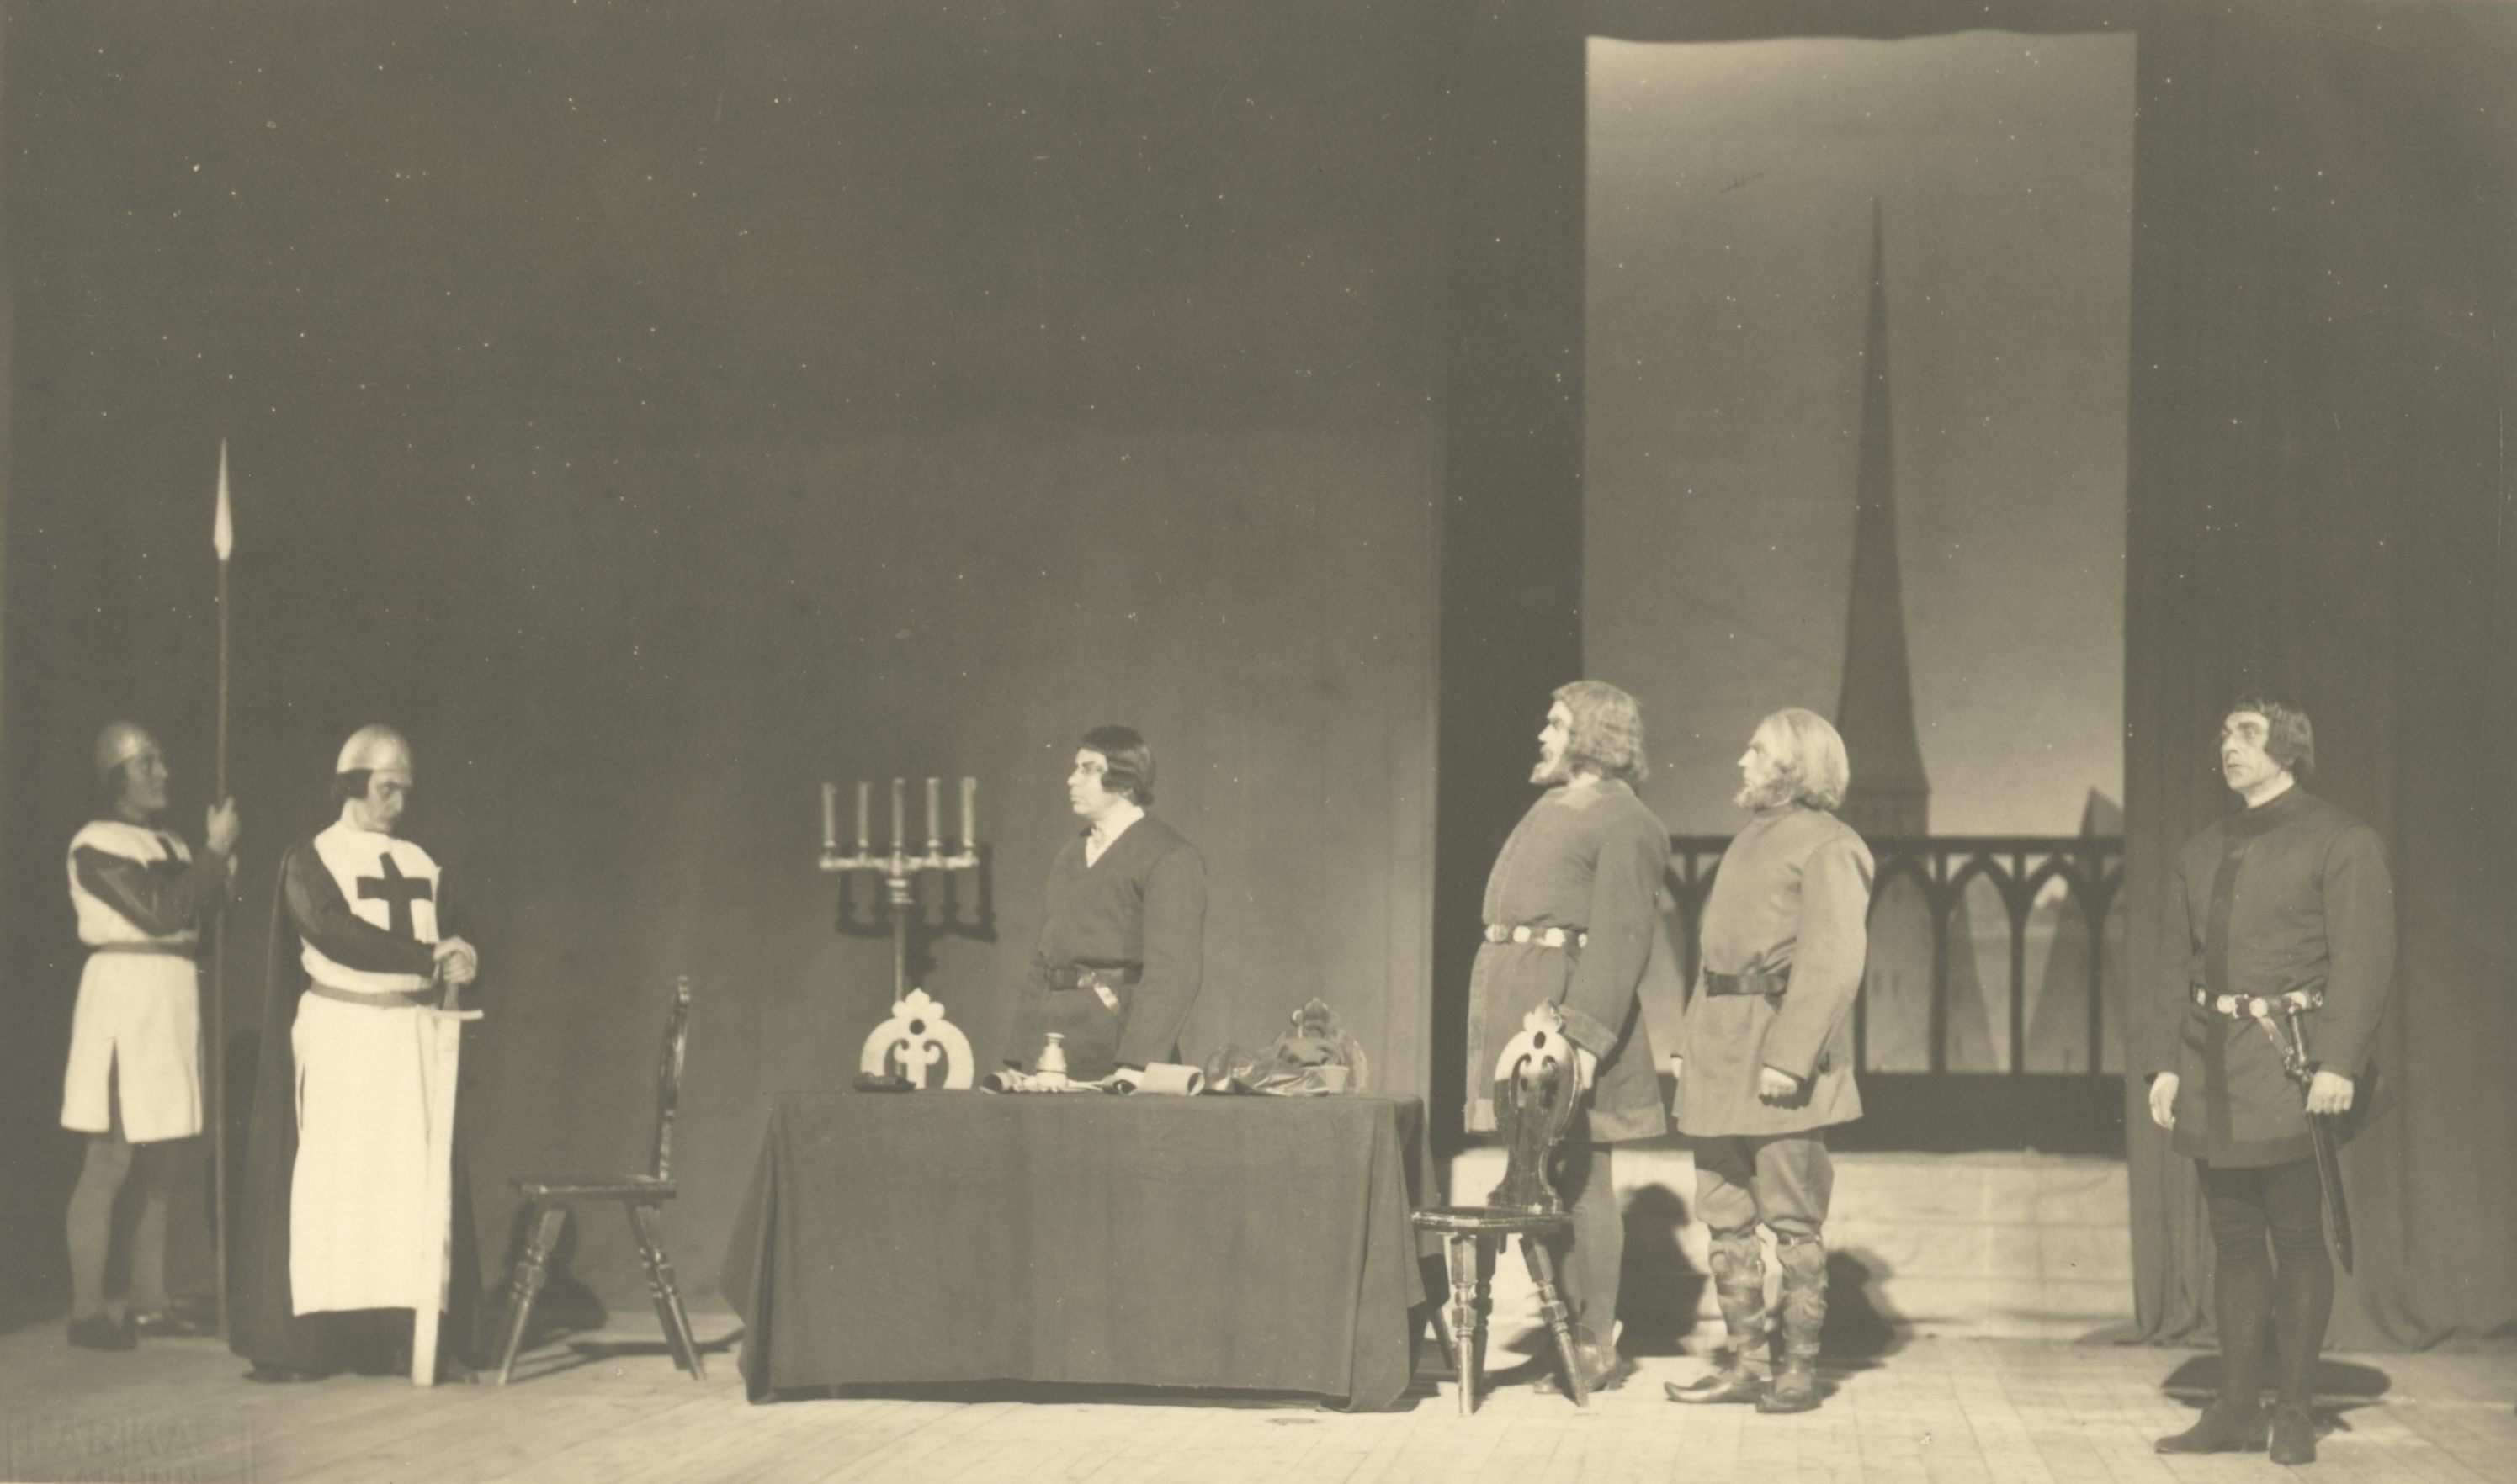 A. Adson "Four Kings" in "Estonia" 1931